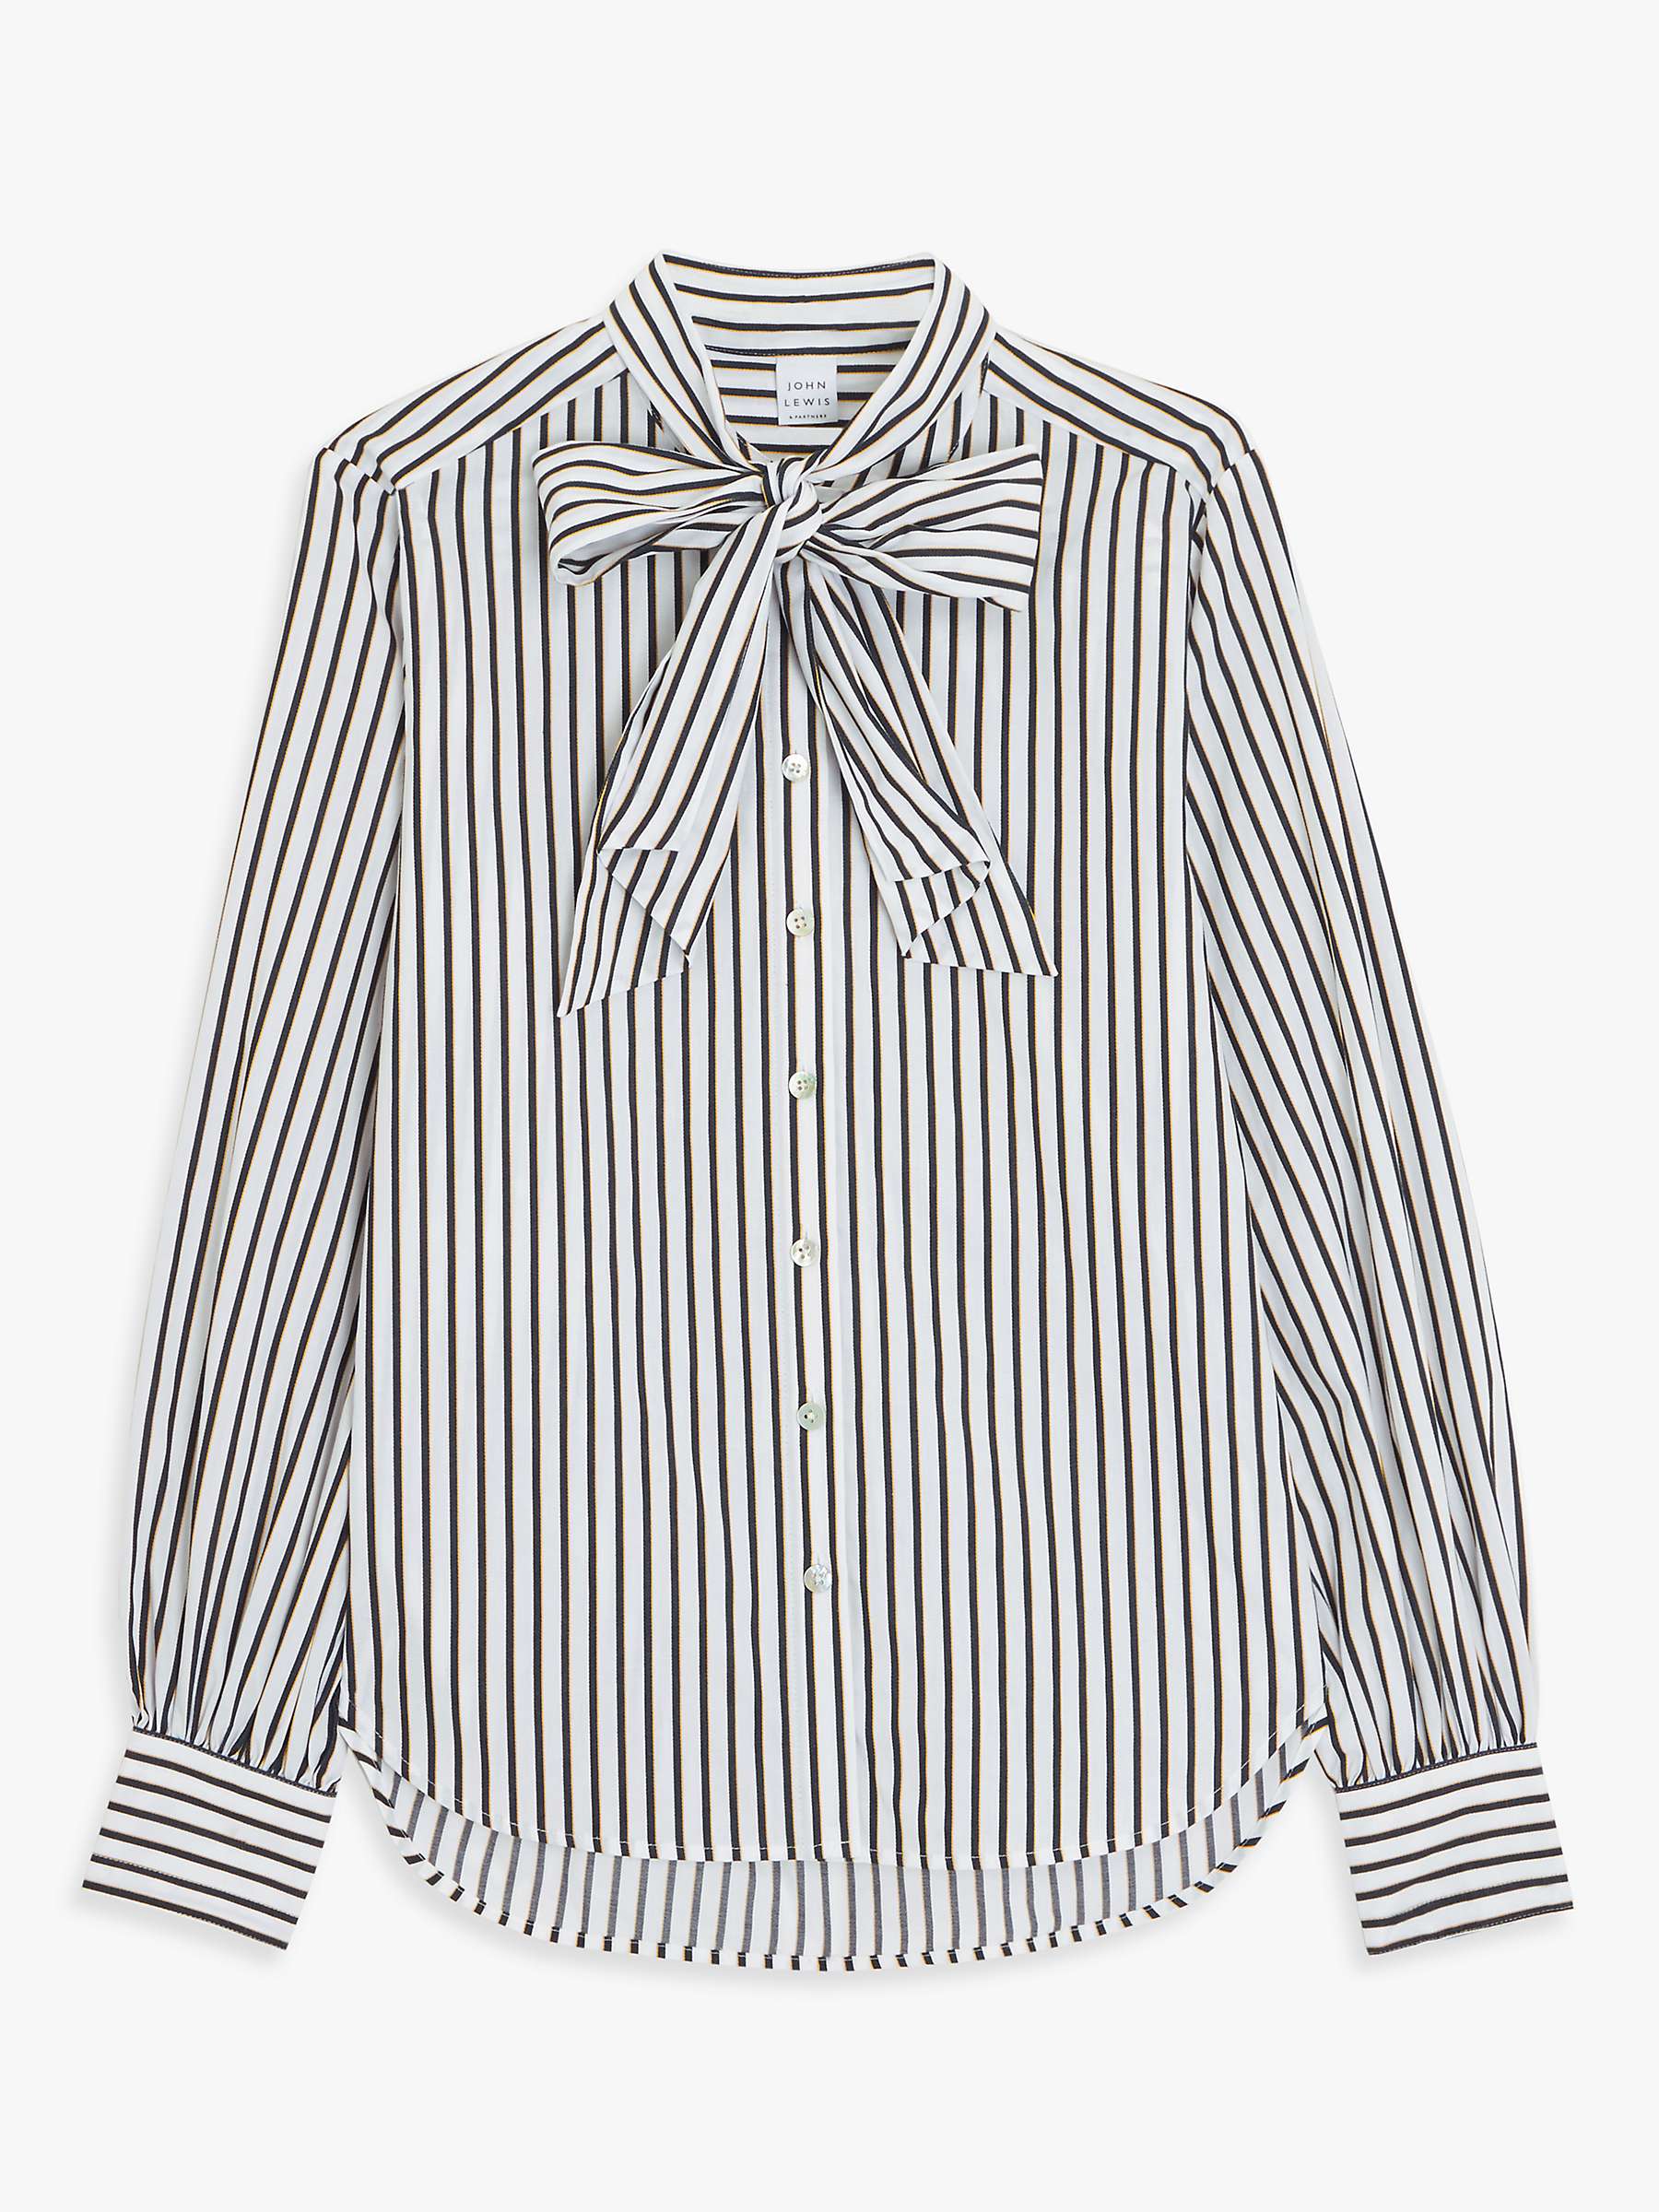 Buy John Lewis Bow Neck Stripe Cotton Shirt, White/Multi Online at johnlewis.com